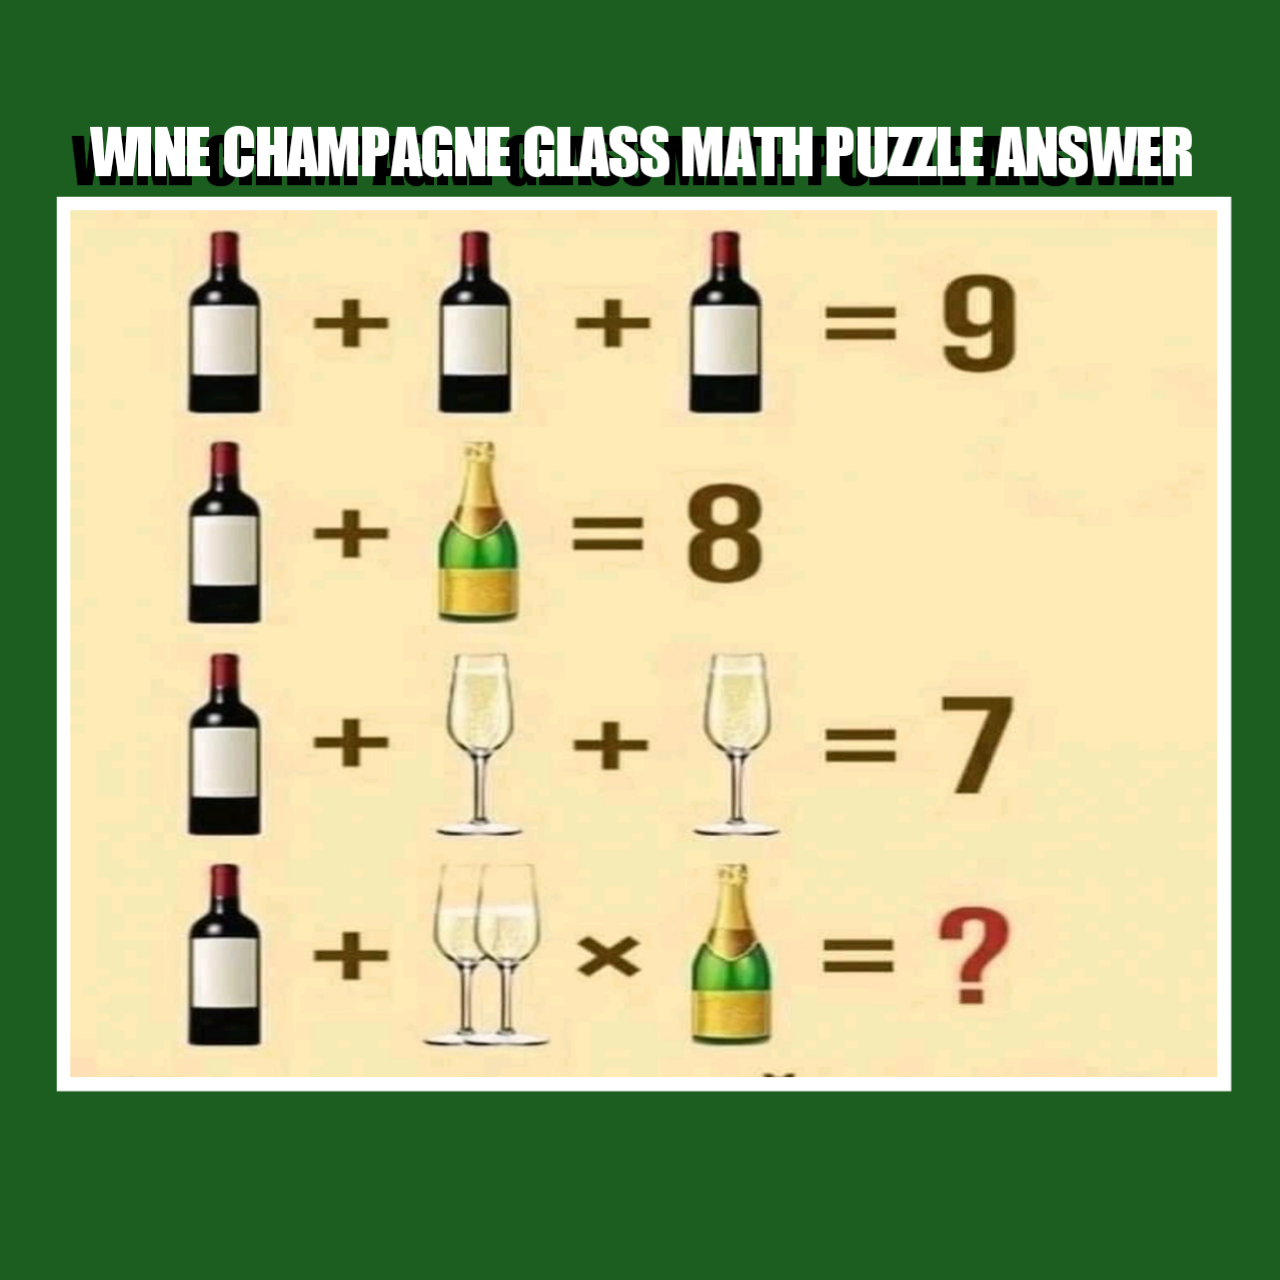 Wine champagne glass math puzzle answer